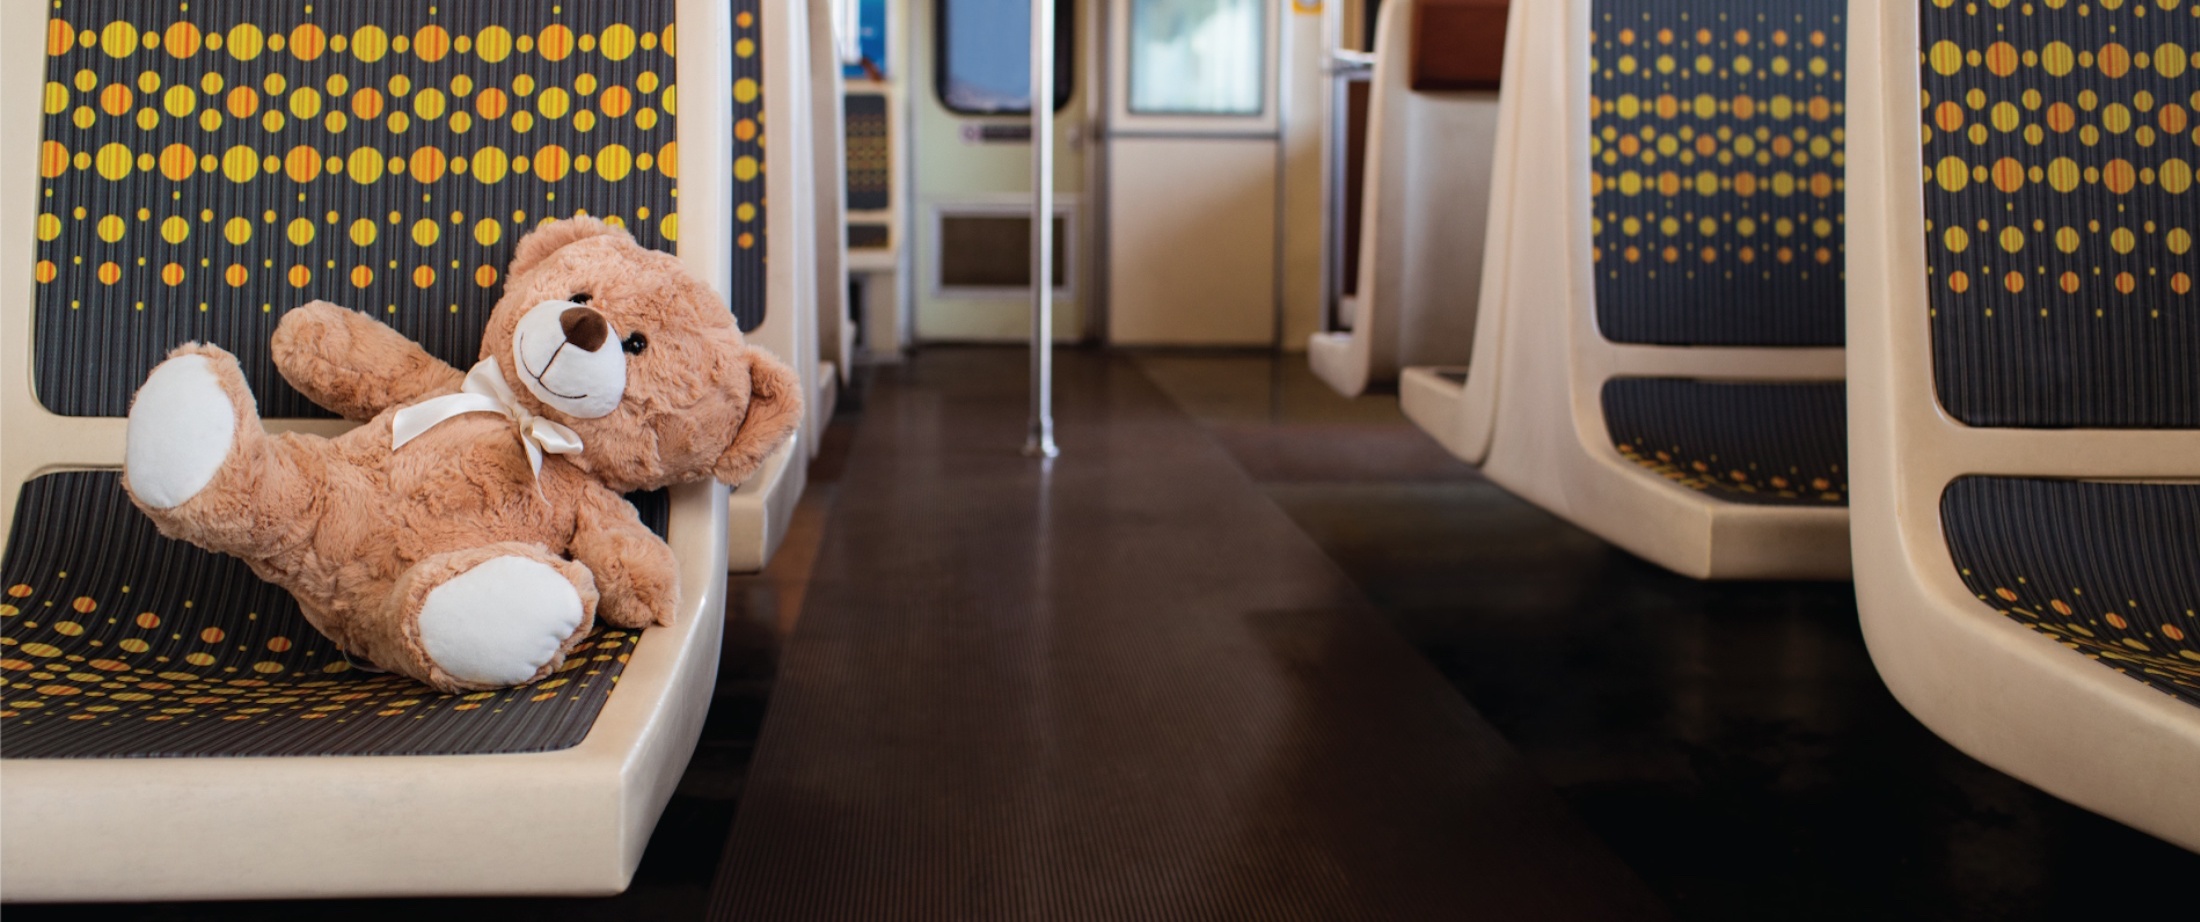 Stuffed animal left behind on a Metro heavy rail vehicle.